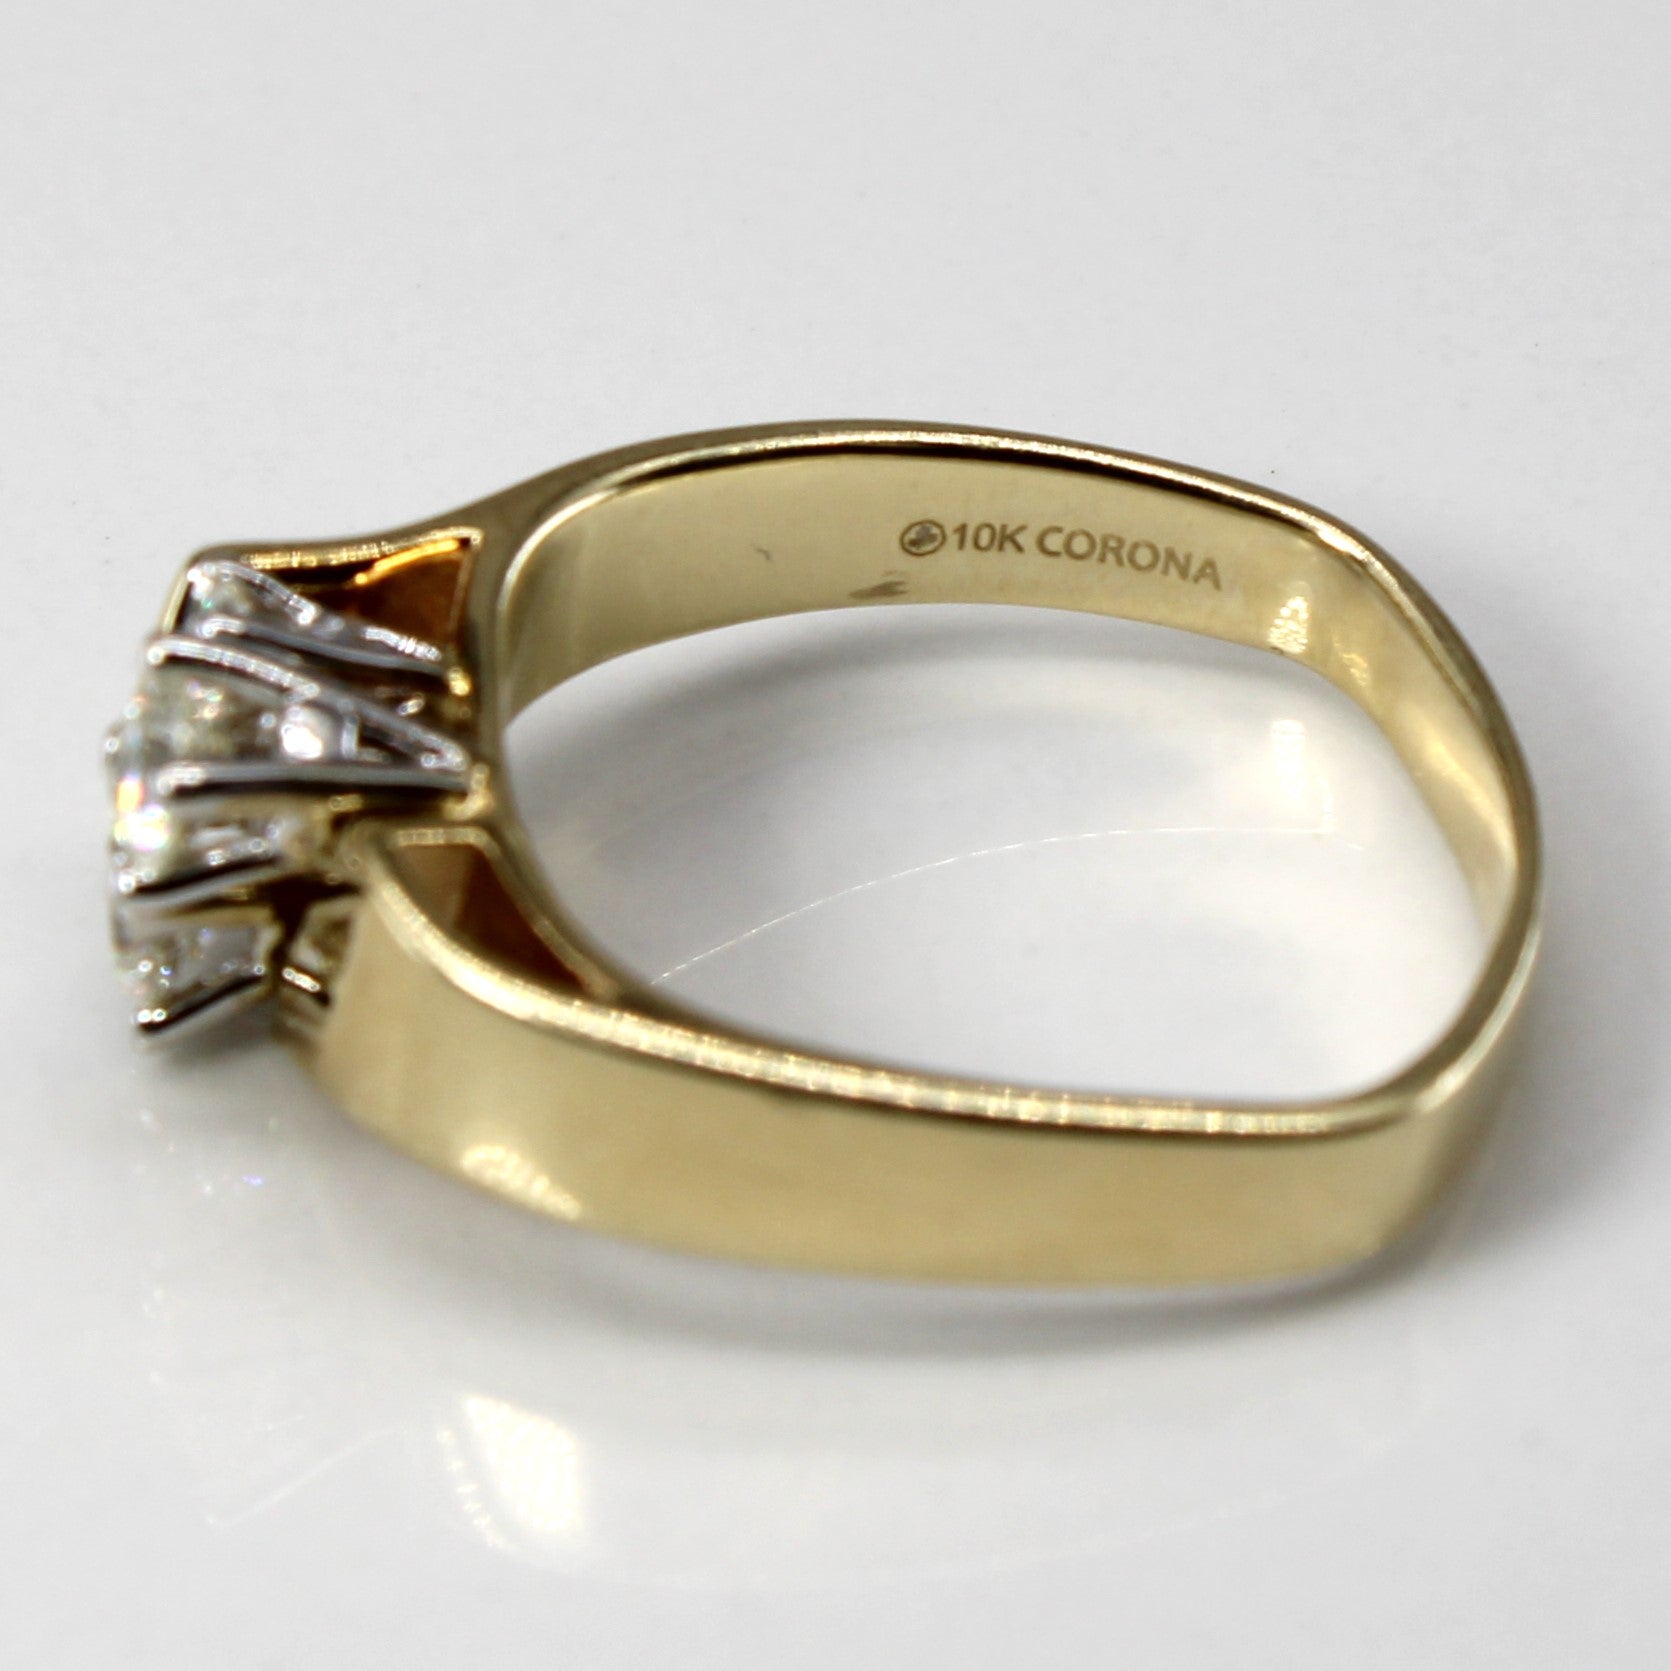 Offset Three Stone Diamond Ring | 0.60ctw | SZ 8.25 |